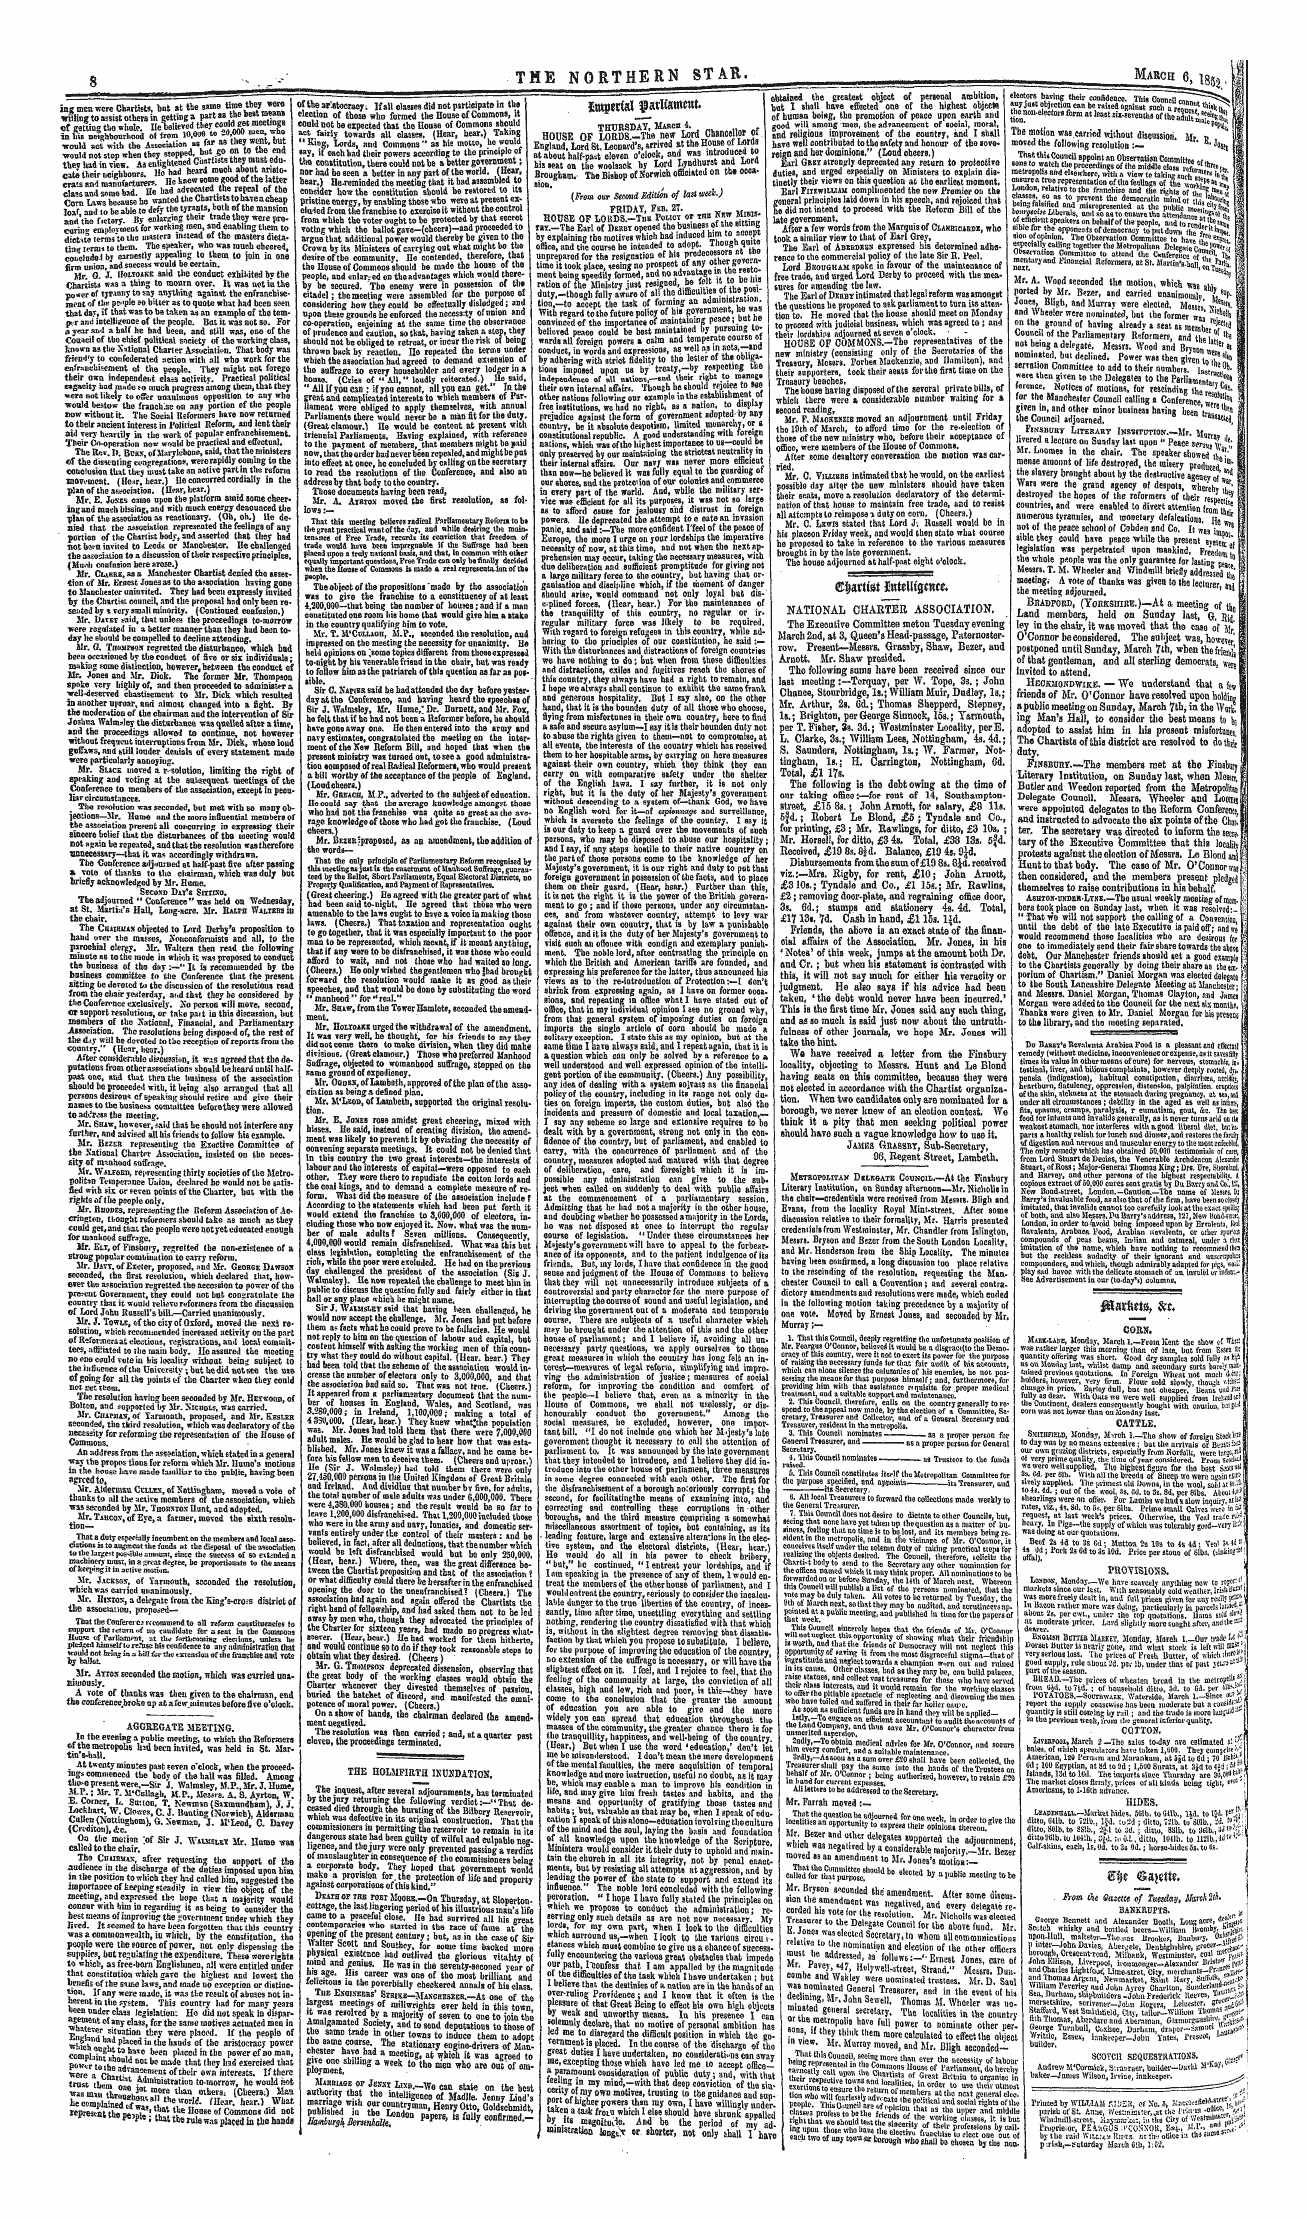 Northern Star (1837-1852): jS F Y, 1st edition - $Tartots, To.